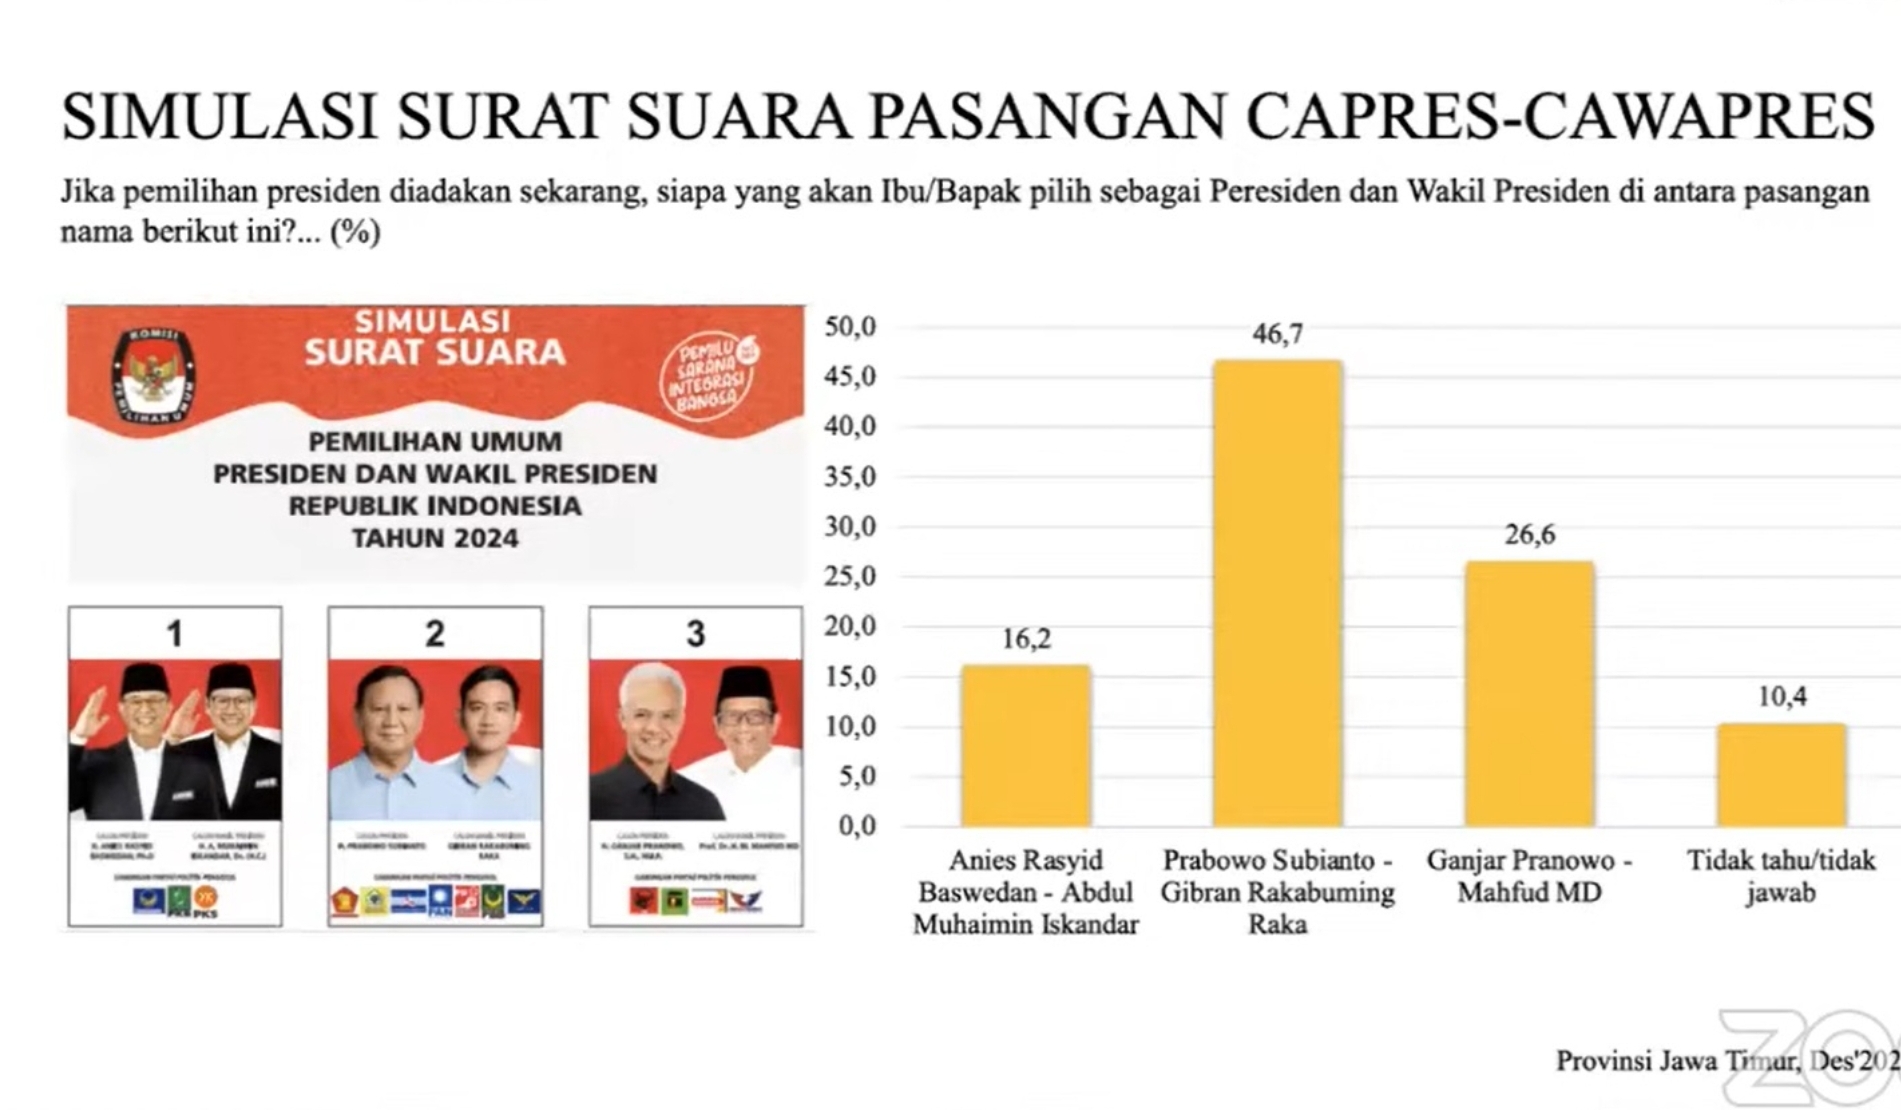 Hasil Survei LSI, Prabowo - Gibran Masih Unggul di Jawa Timur, Kemungkinan Pilpres 2 Putaran